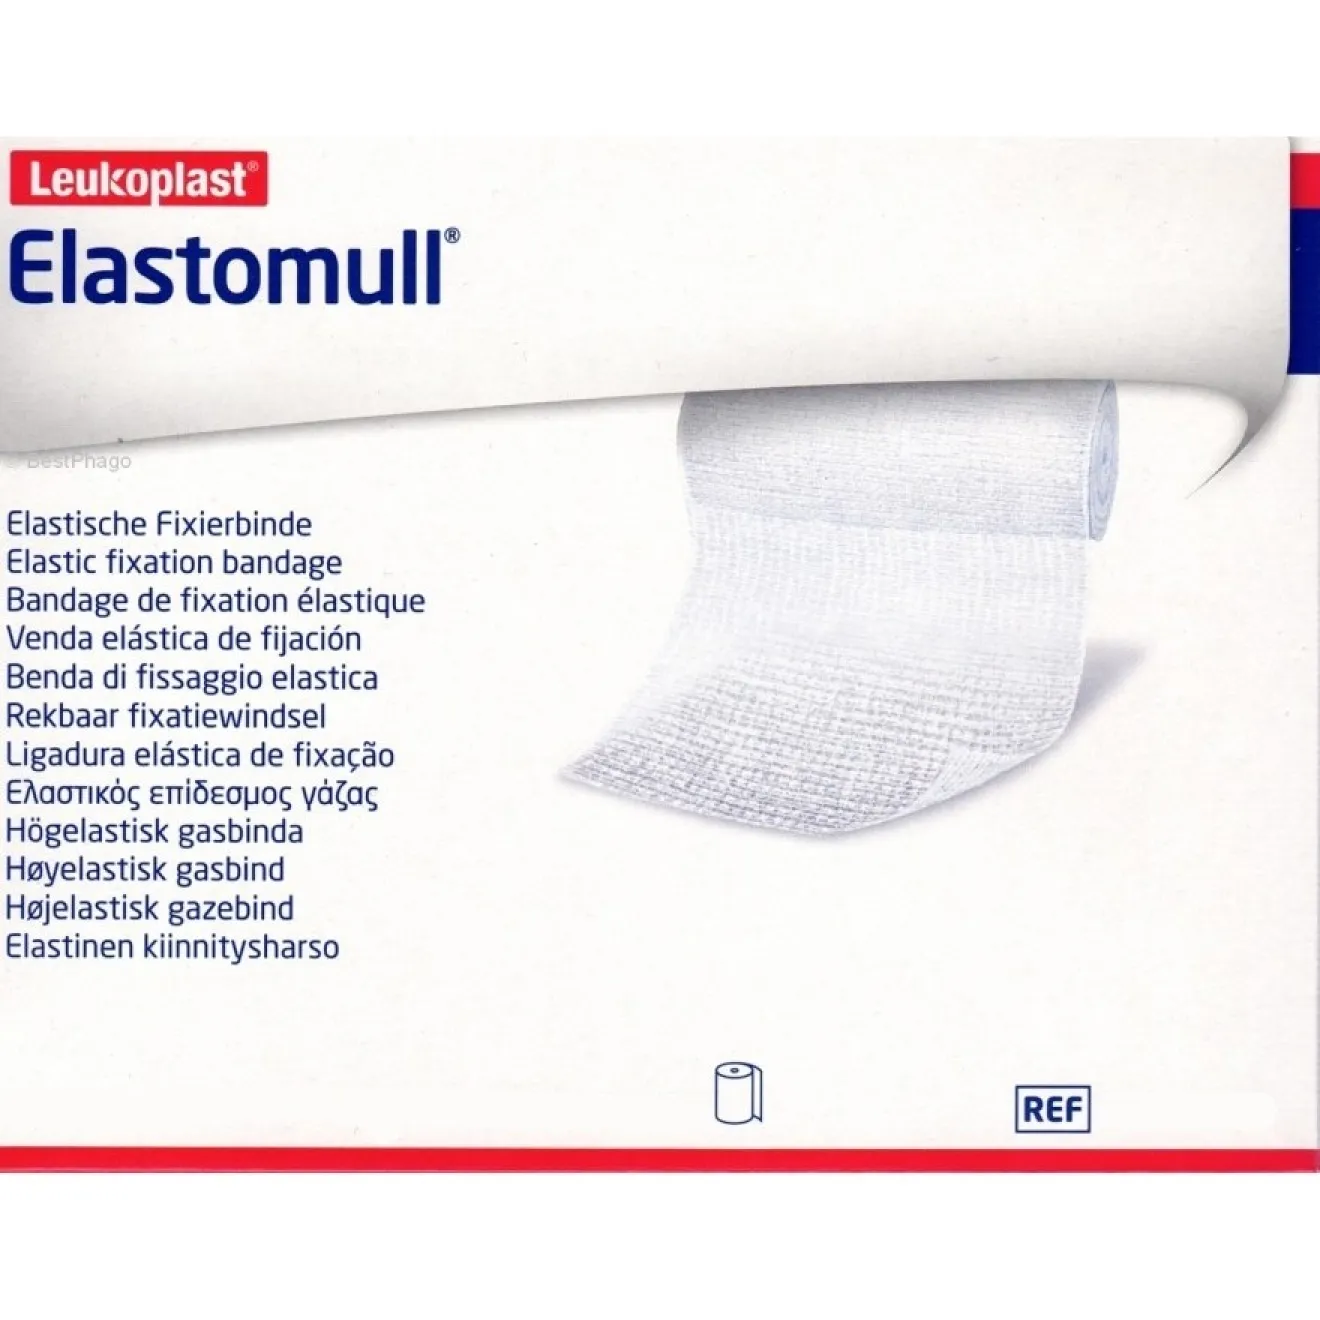 Elastomull 4mx6cm elastische Fixierbinde 2100 20 ST